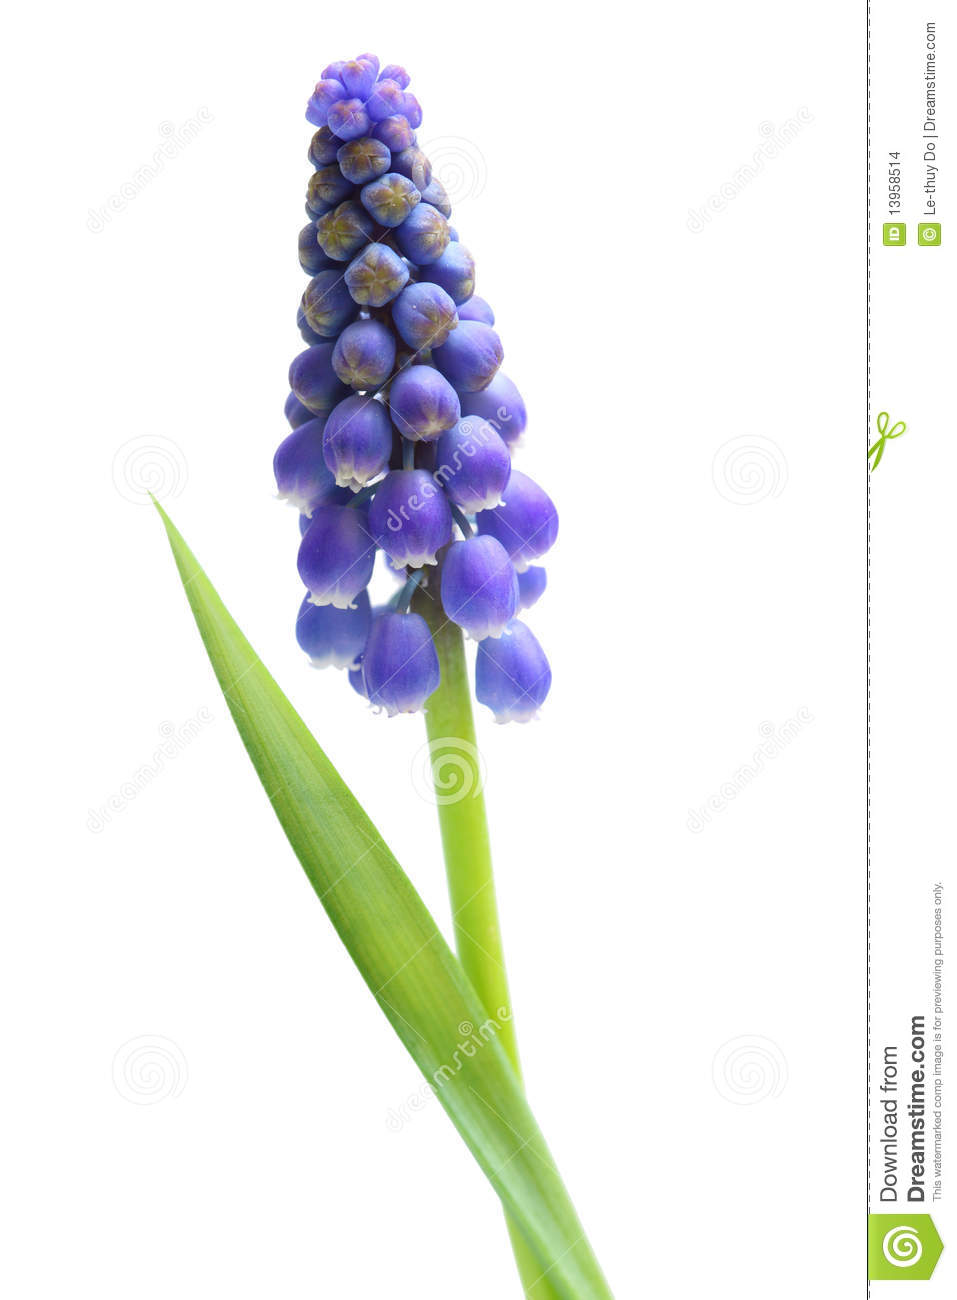 Grape Hyacinth clipart #1, Download drawings